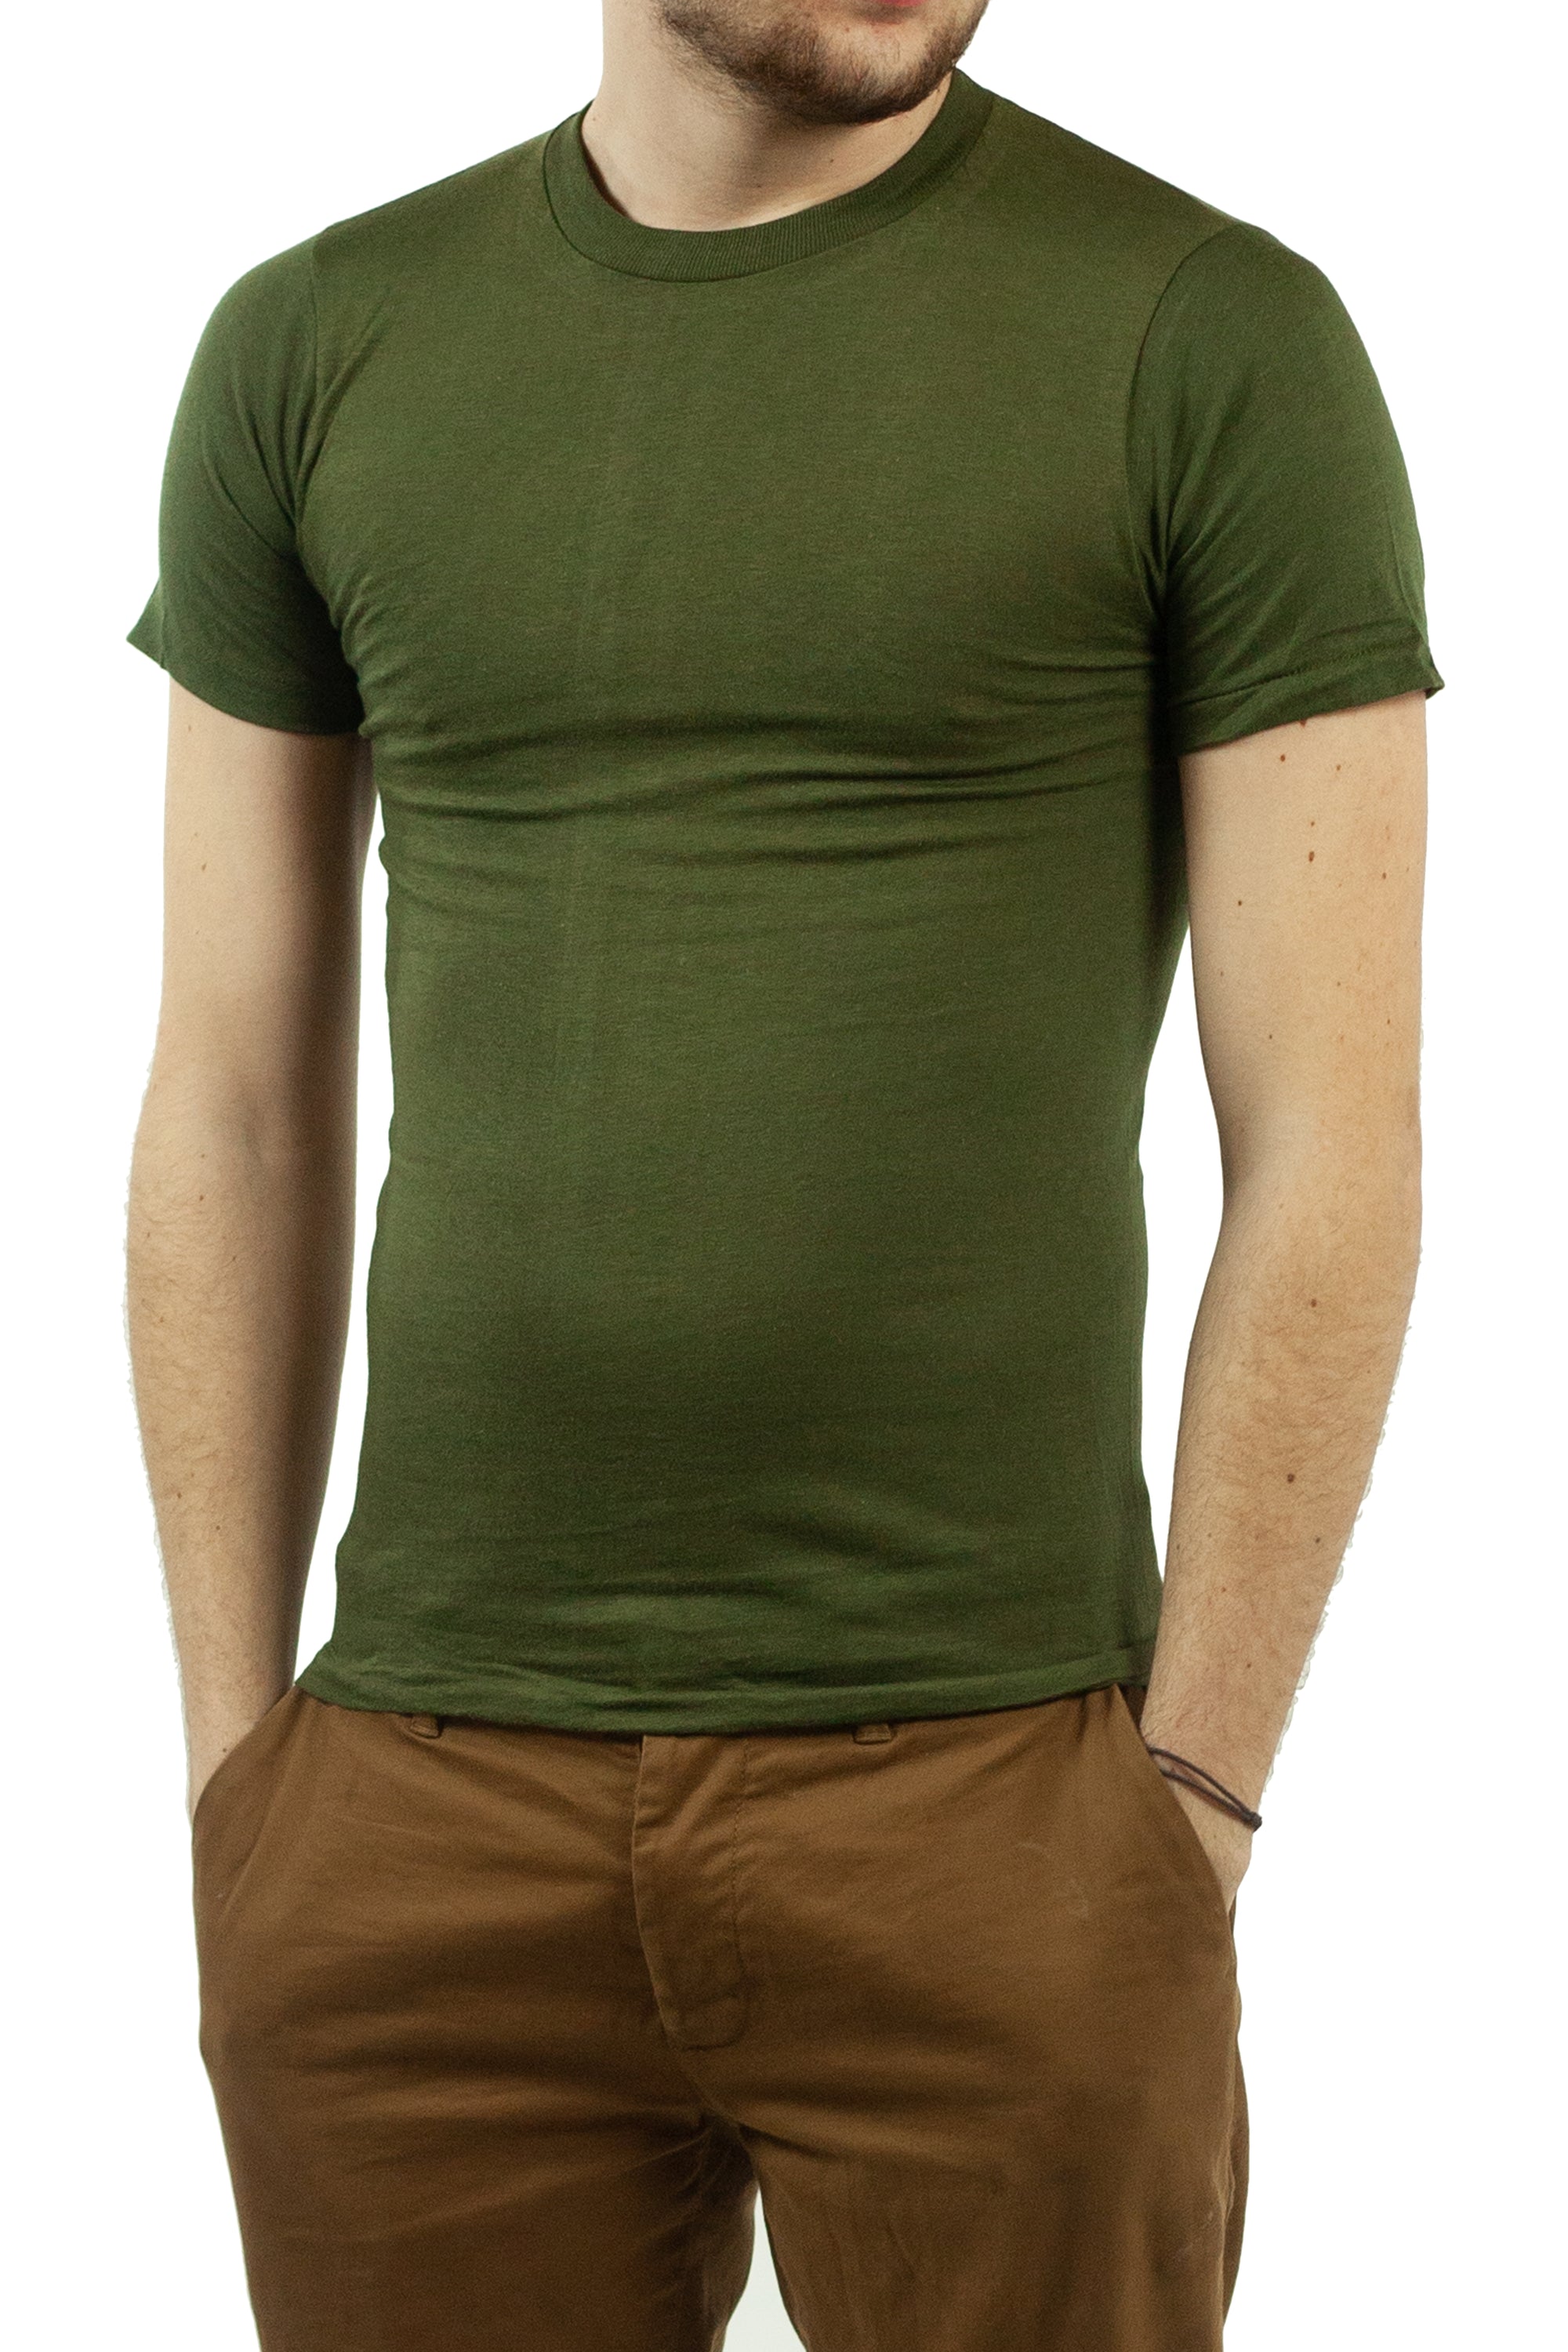 German Army - Plain Olive Green Cotton T-Shirt - Grade 1